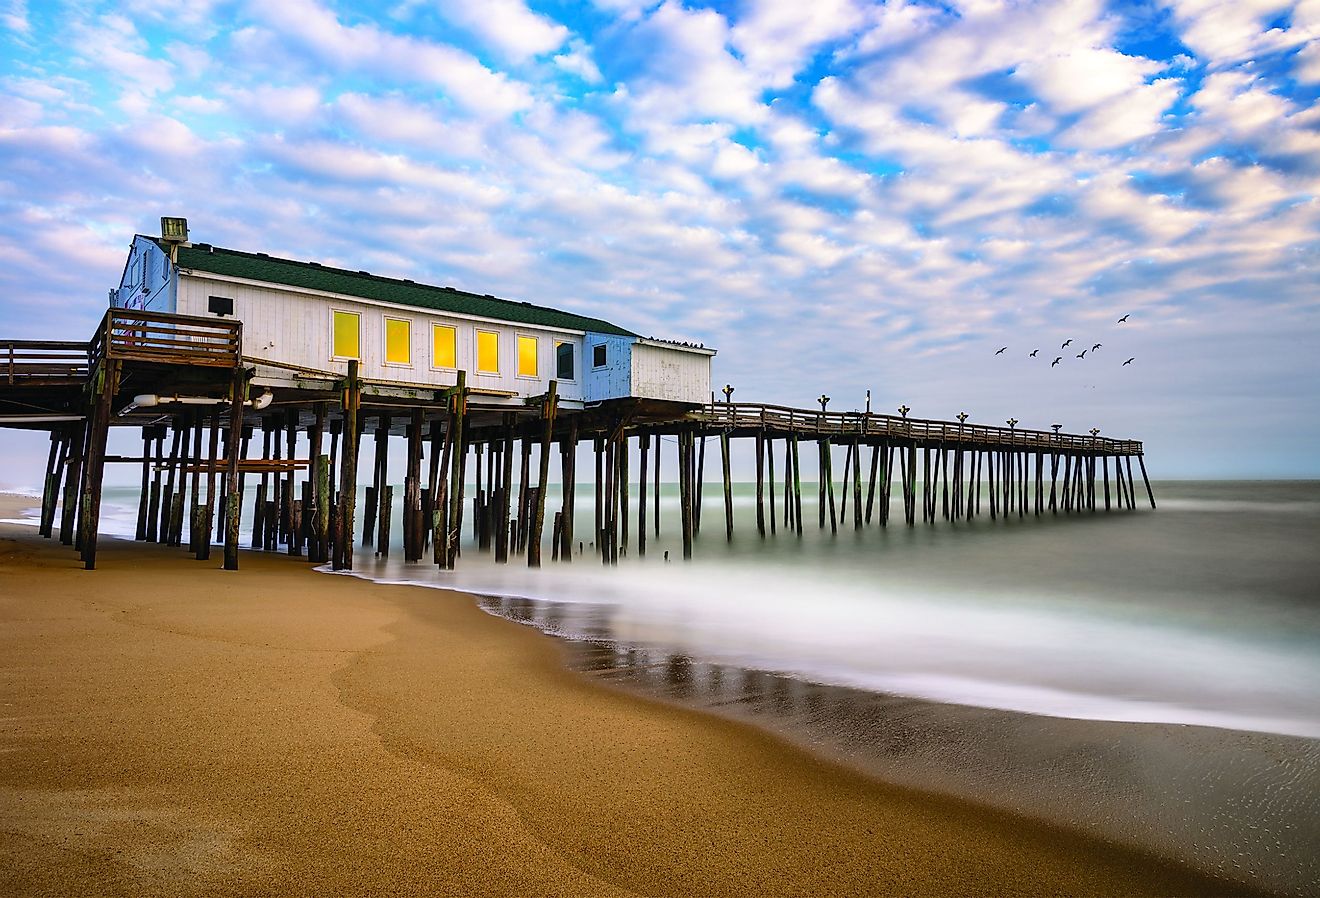 Morning time at Kitty Hawk fishing pier along North Carolina's Outer Banks. Image credit anthony heflin via Shutterstock.